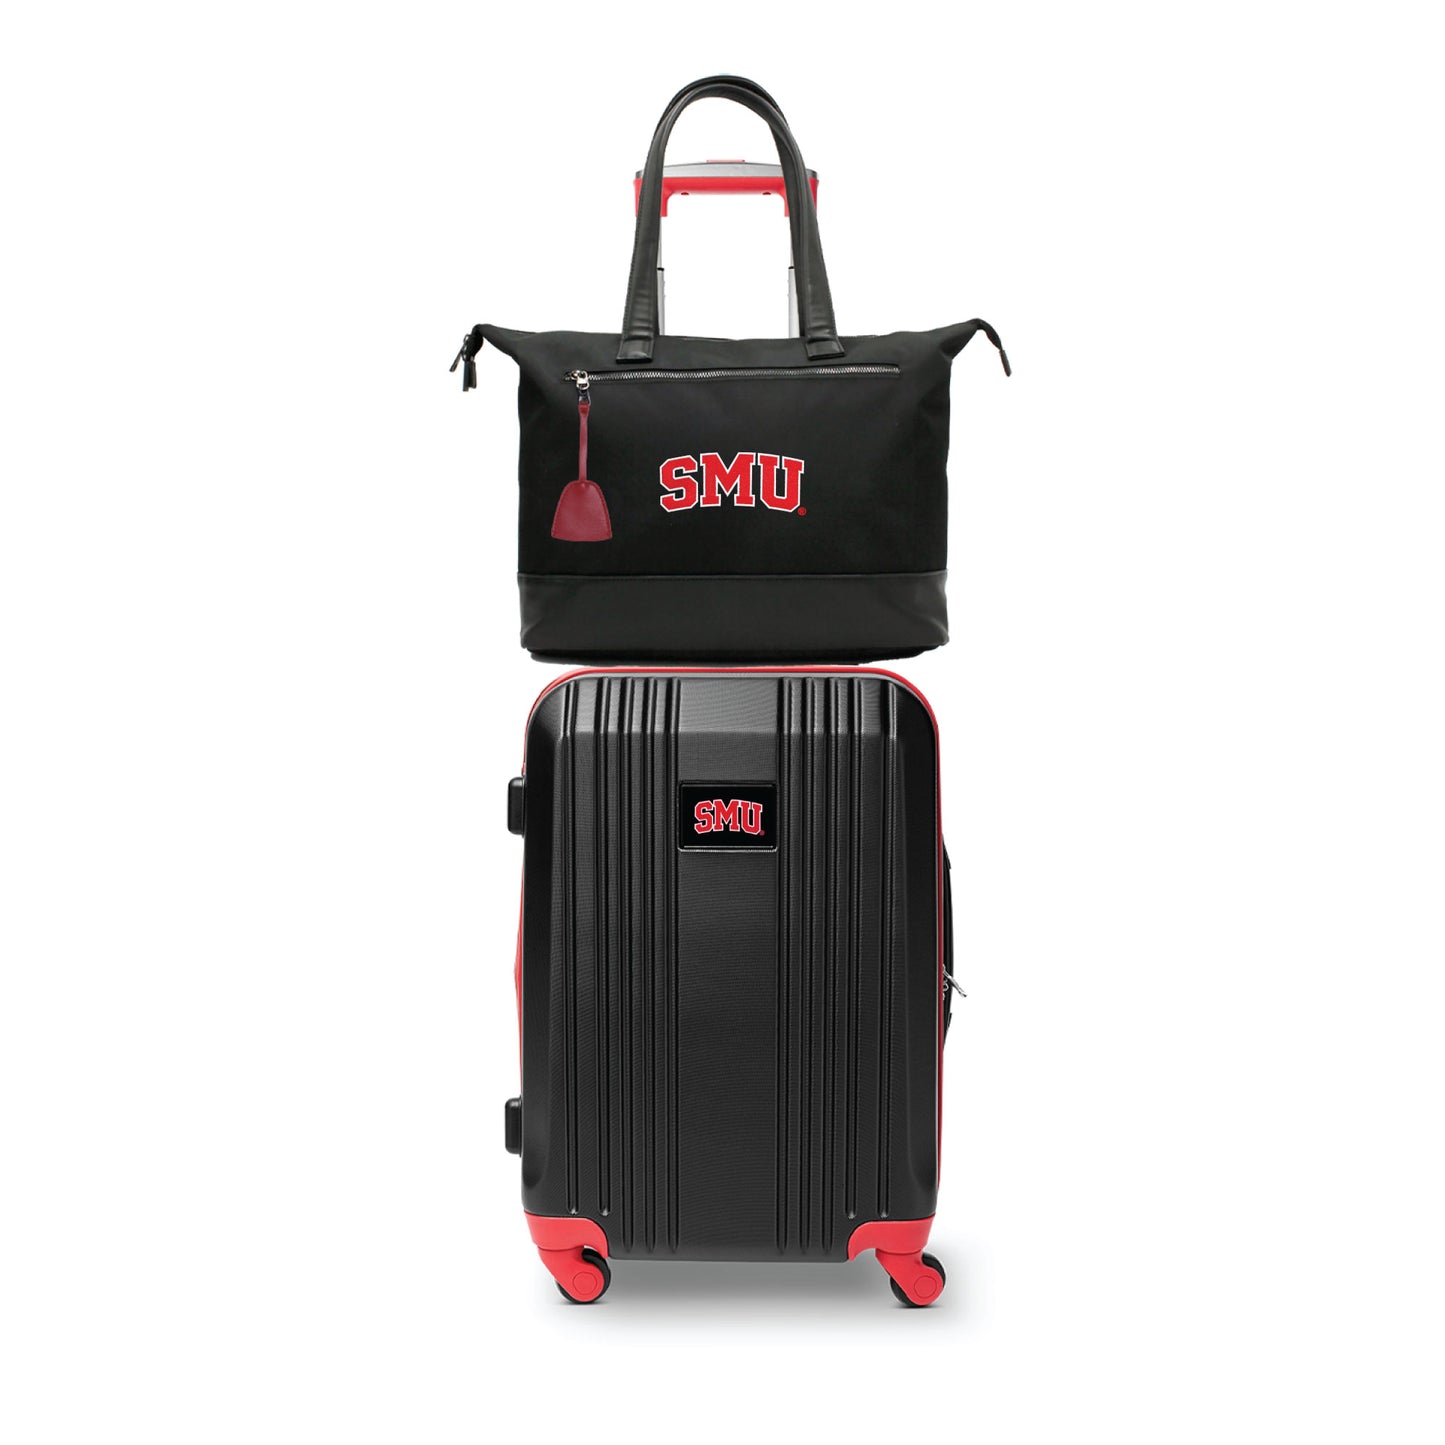 Southern Methodist Mustangs Premium Laptop Tote Bag and Luggage Set